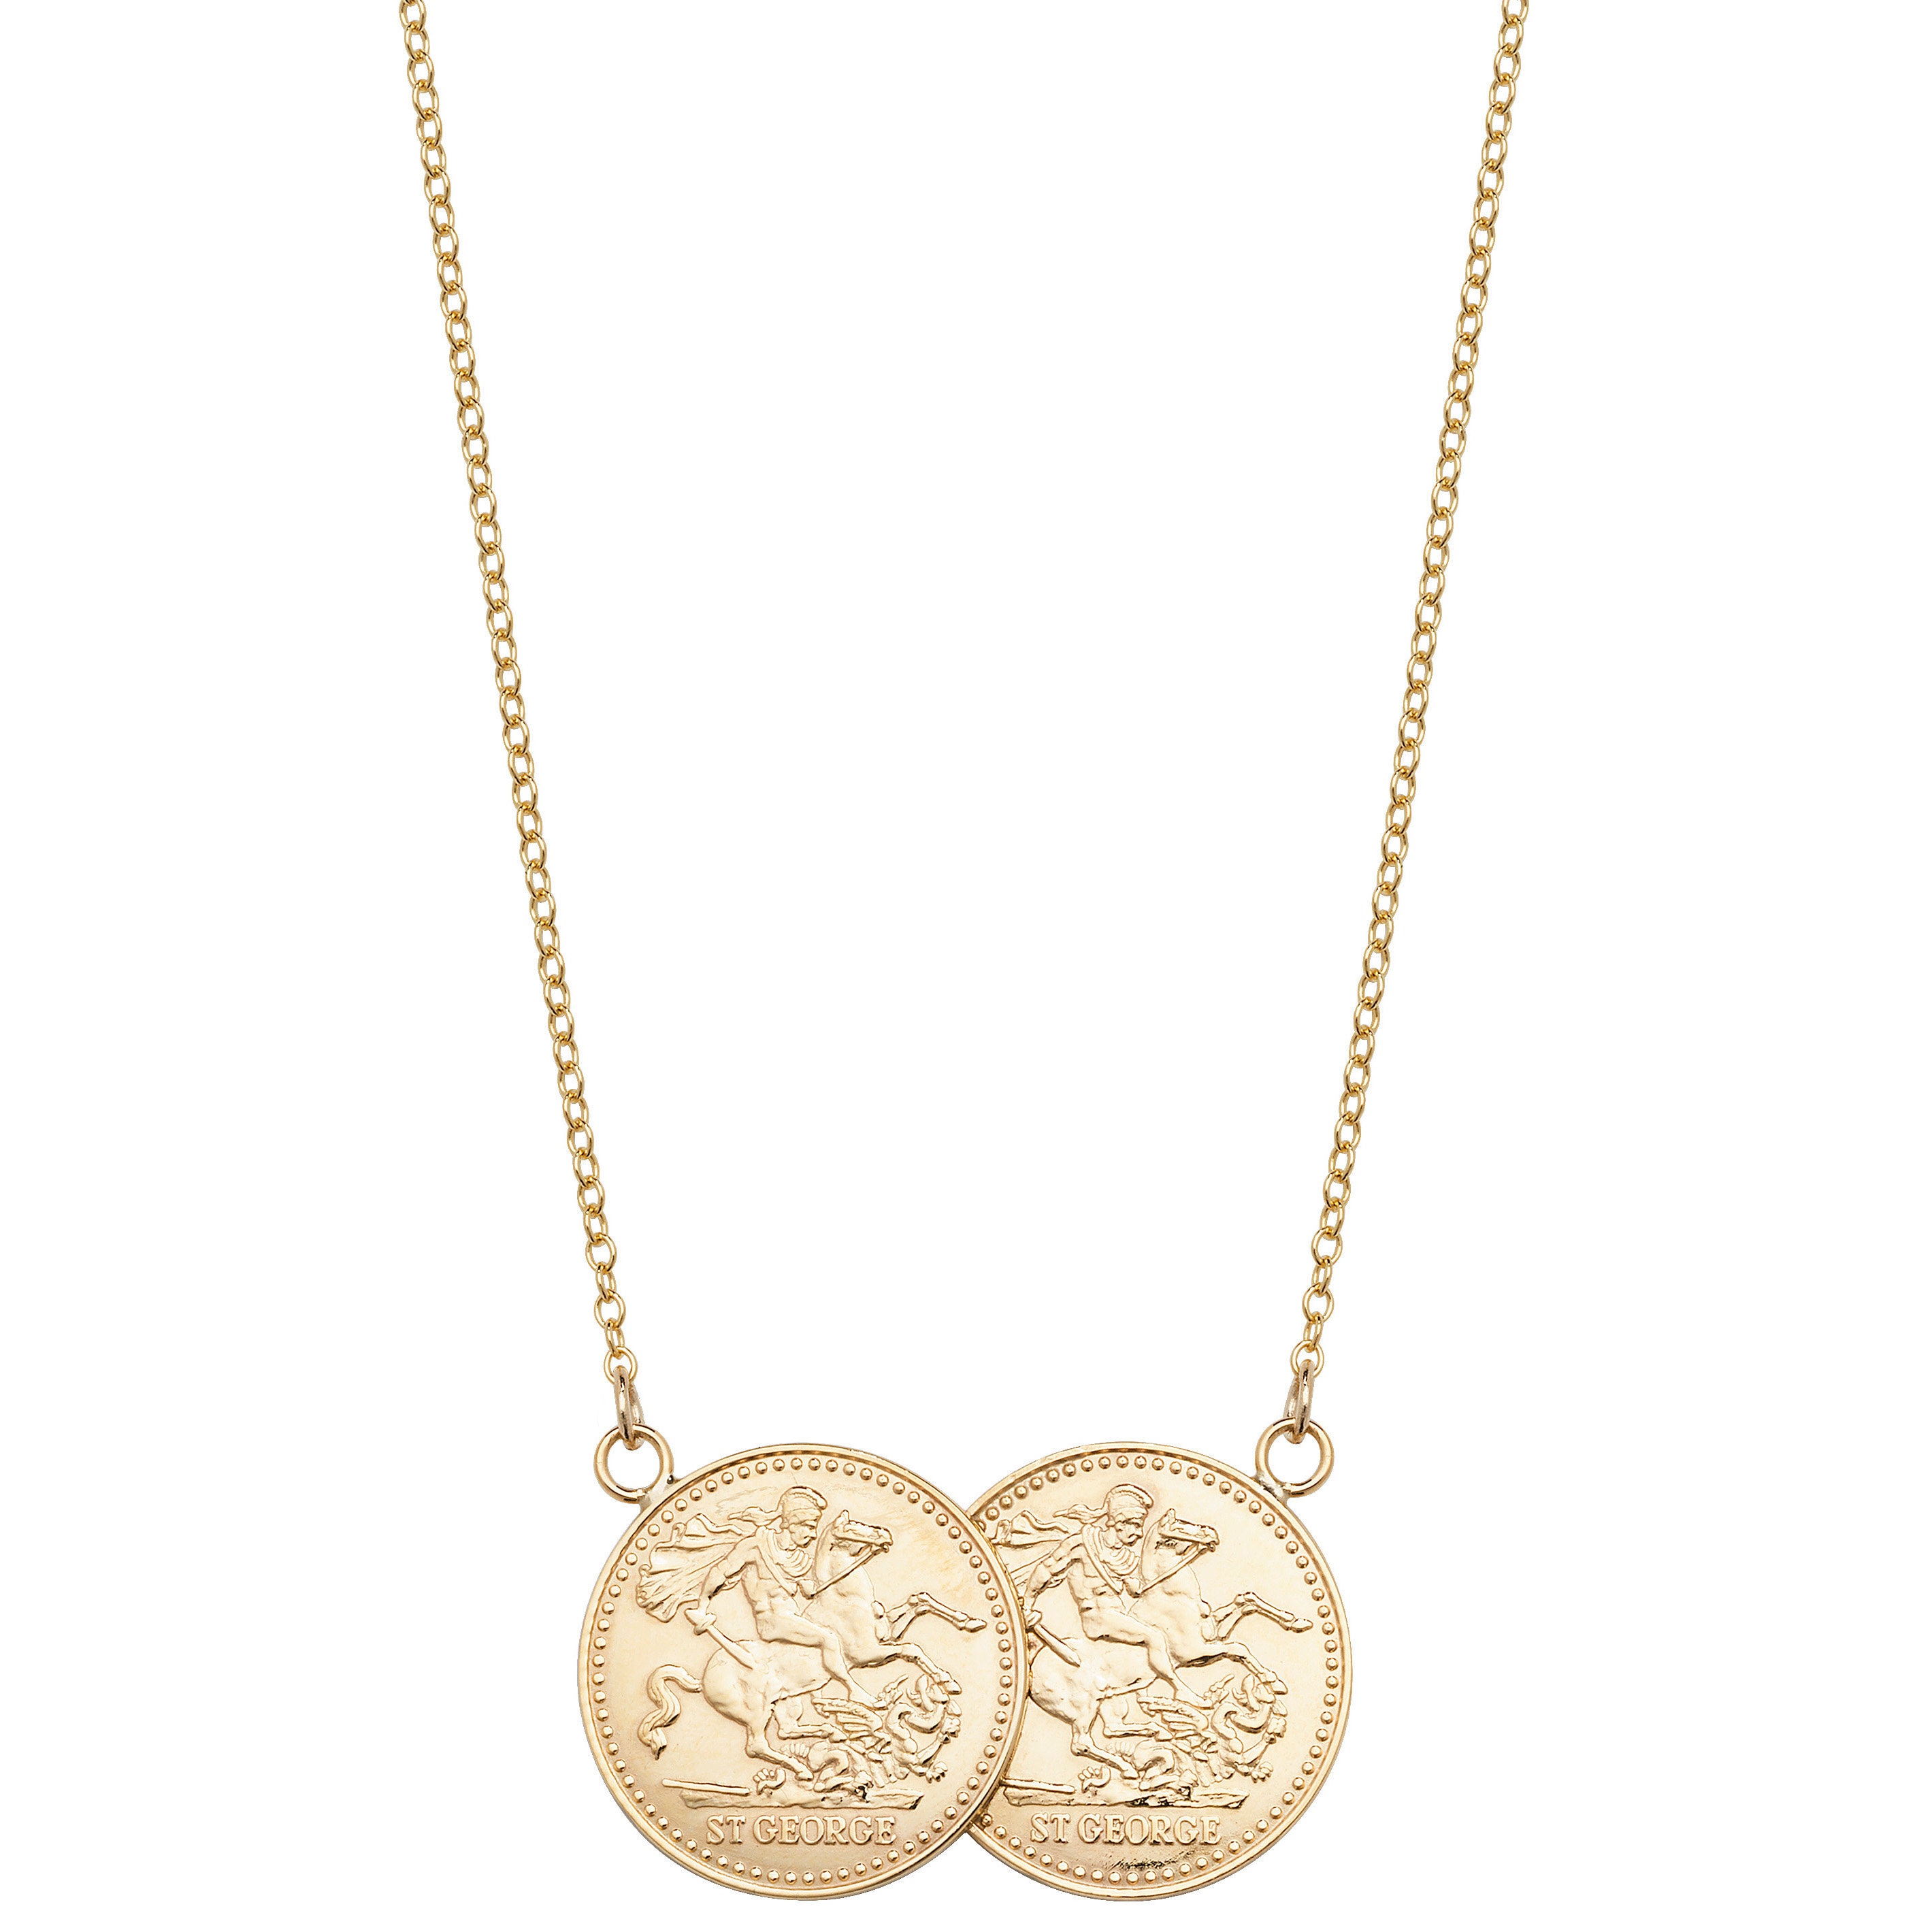 Gold Sovereign Pendant on 14ct Chain, 1958 - Pendants/Lockets - Jewellery